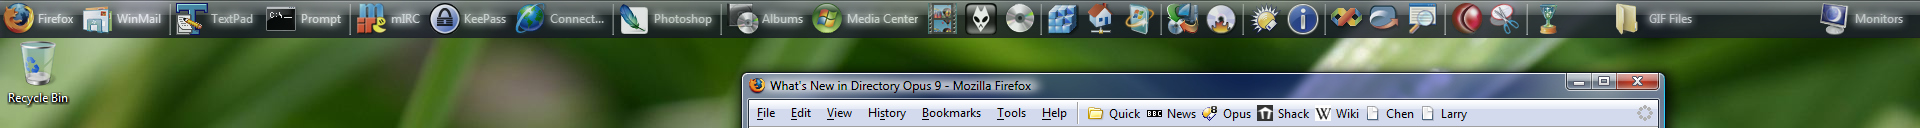 Directory Opus 9: The "Taskbar" style makes docked toolbars blend in with Vista's taskbar.